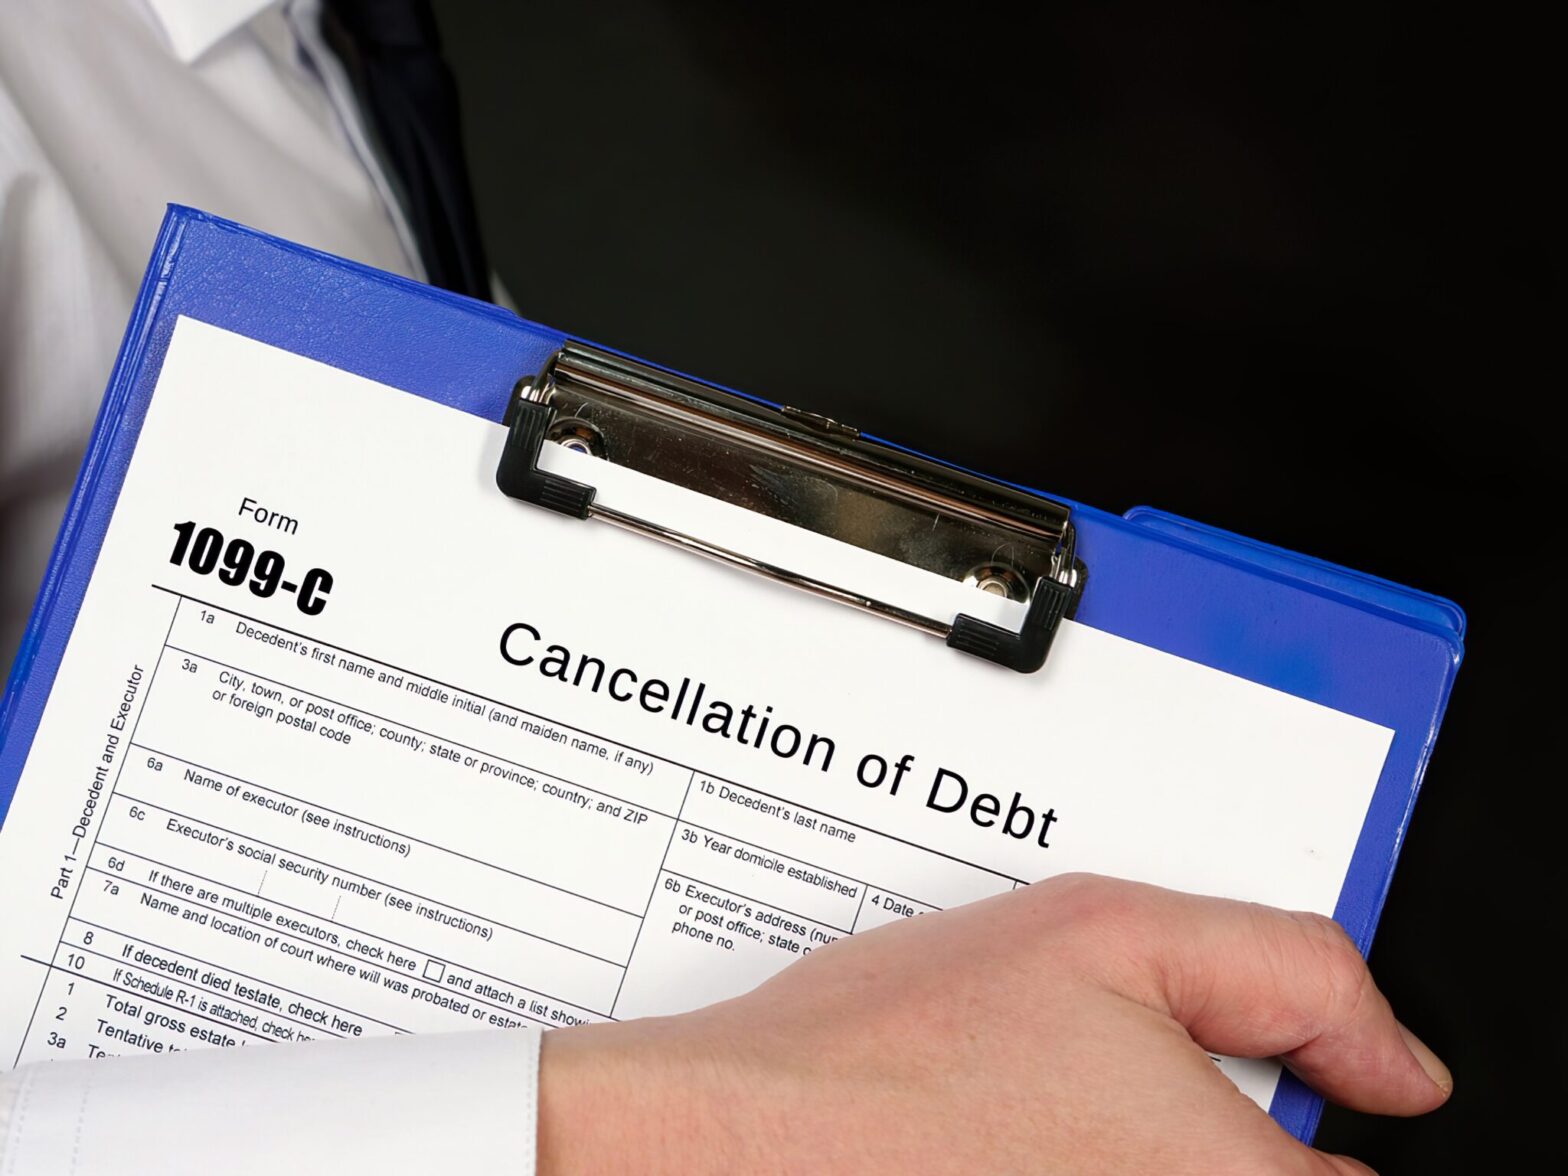 Cancellation of Debt